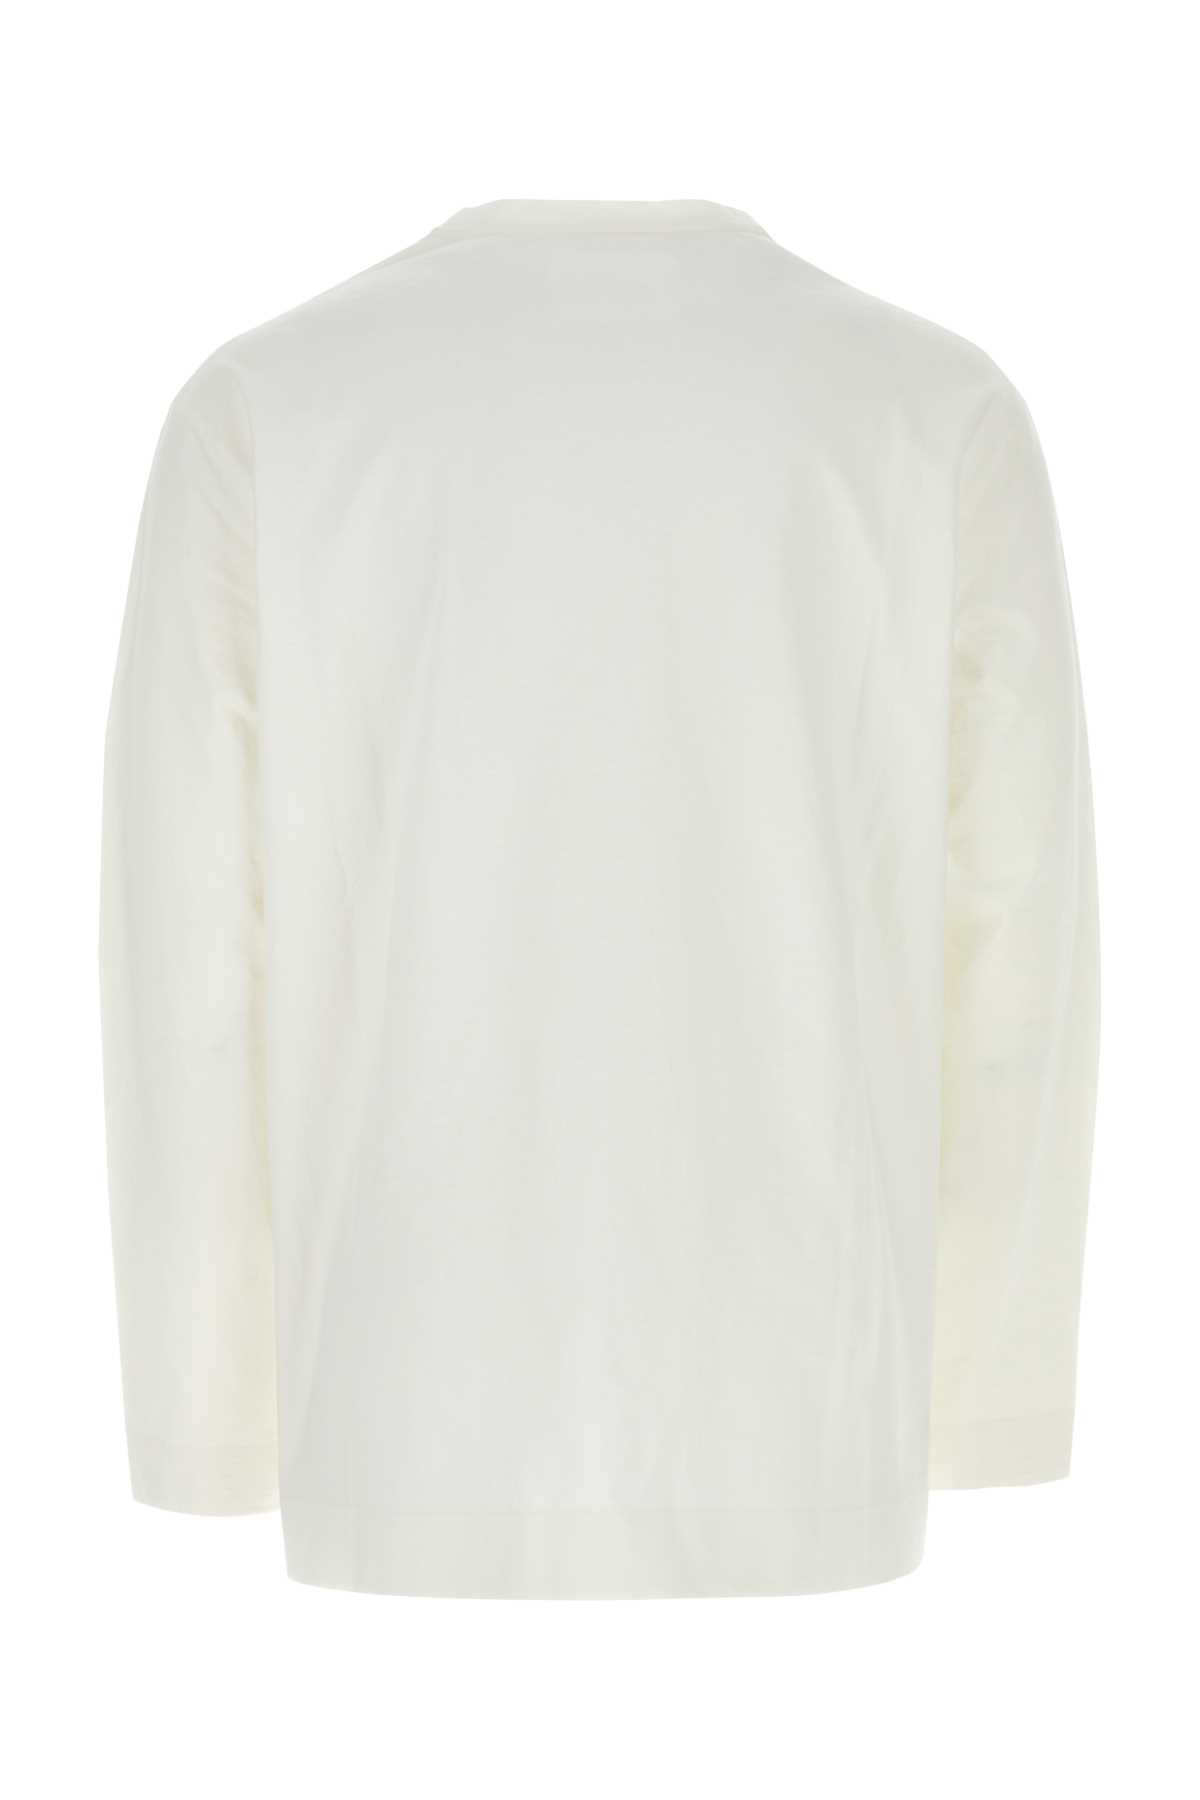 Jil Sander White Stretch Cotton Oversize T-shirt In 100